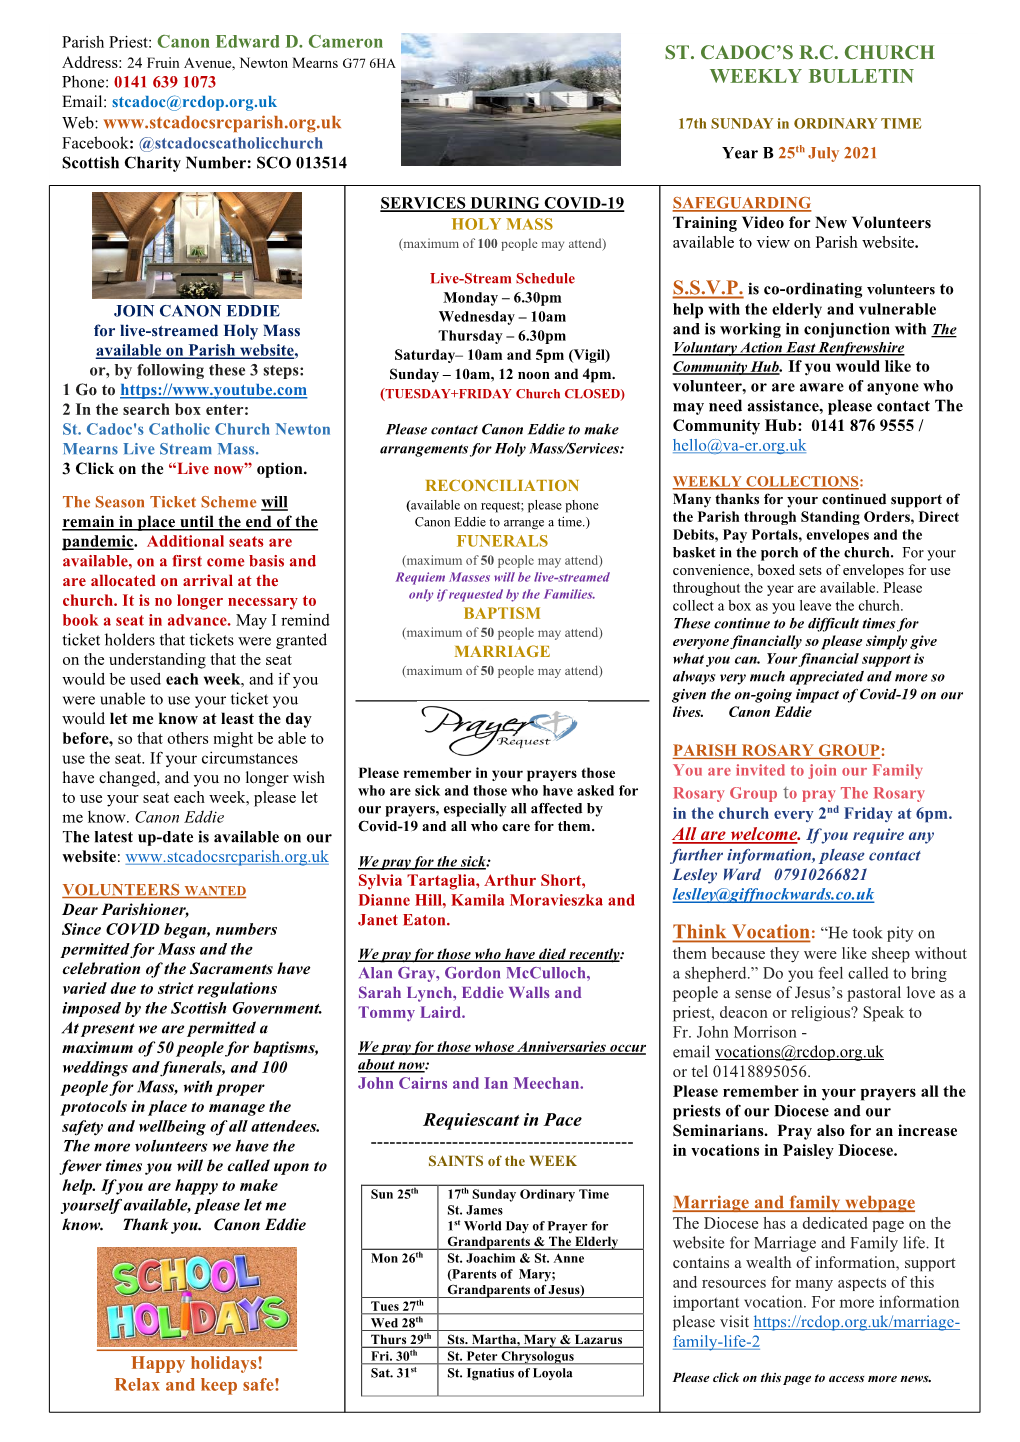 St. Cadoc's R.C. Church Weekly Bulletin